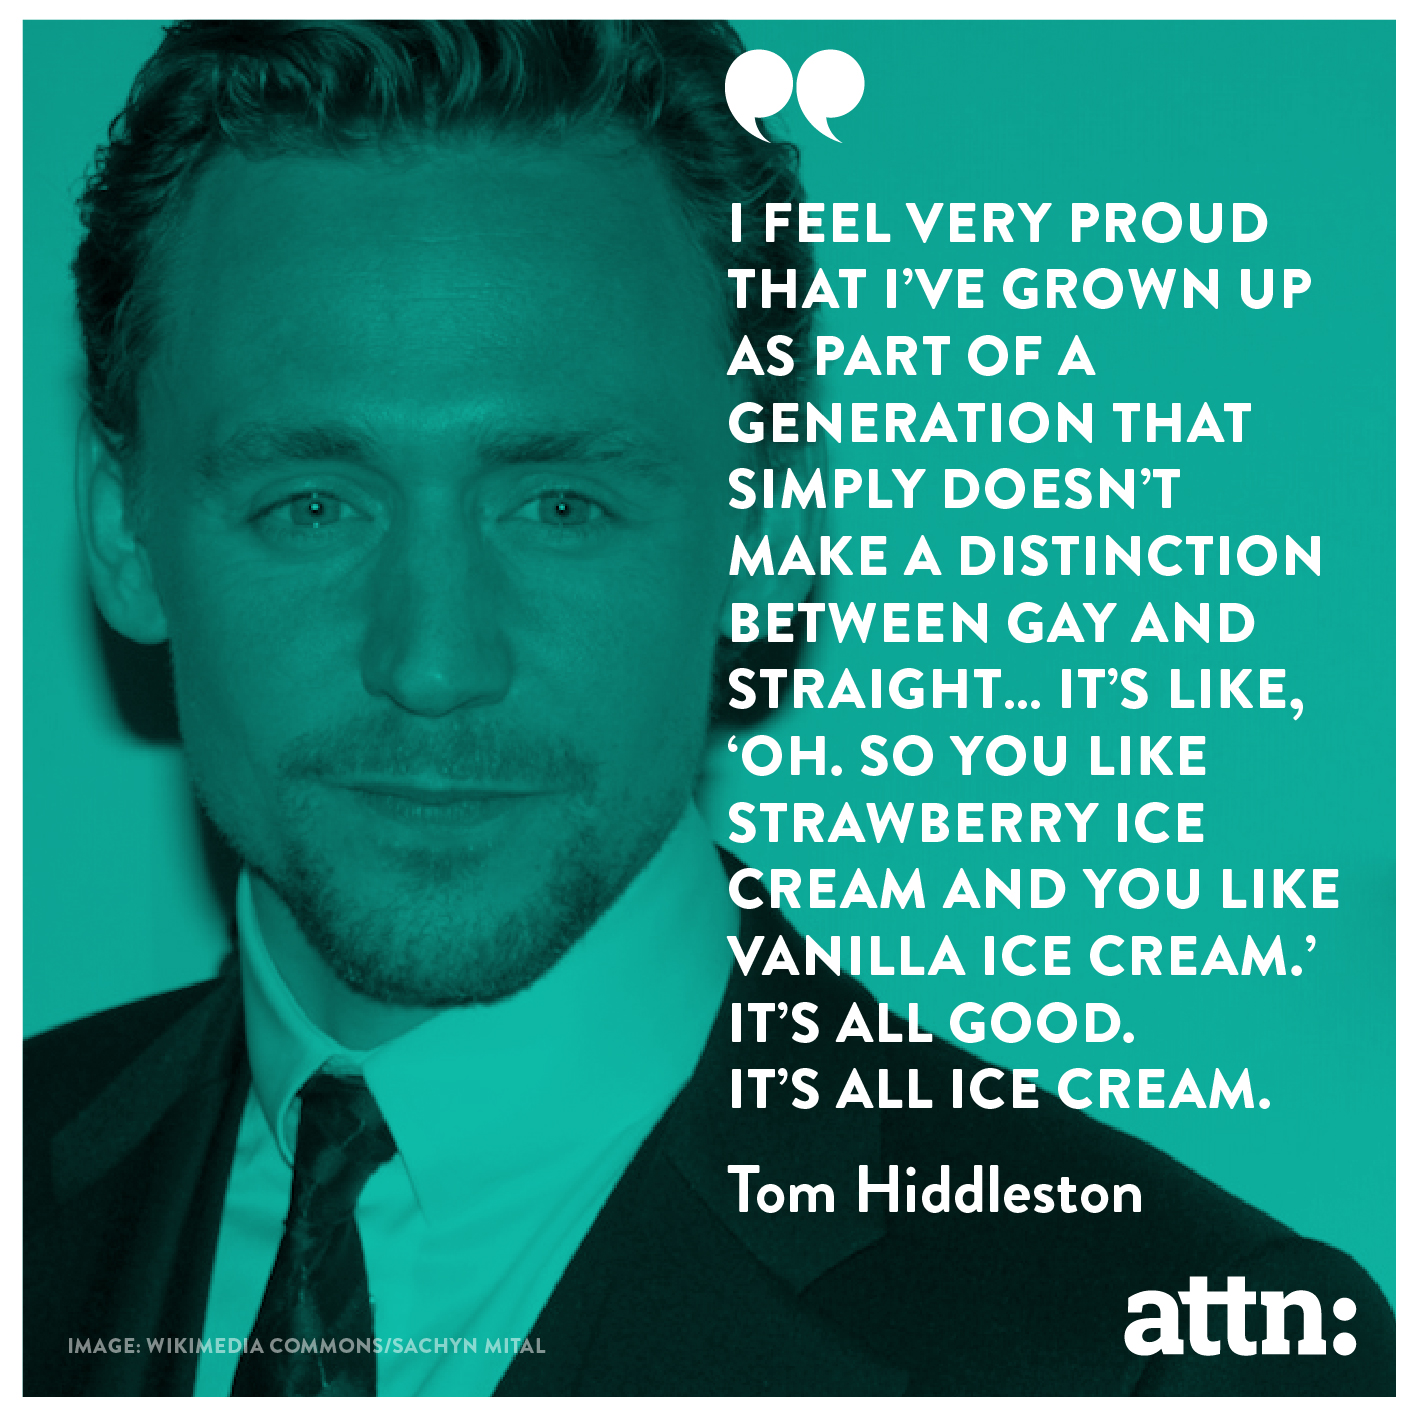 Tom Hiddleston on gay rights.